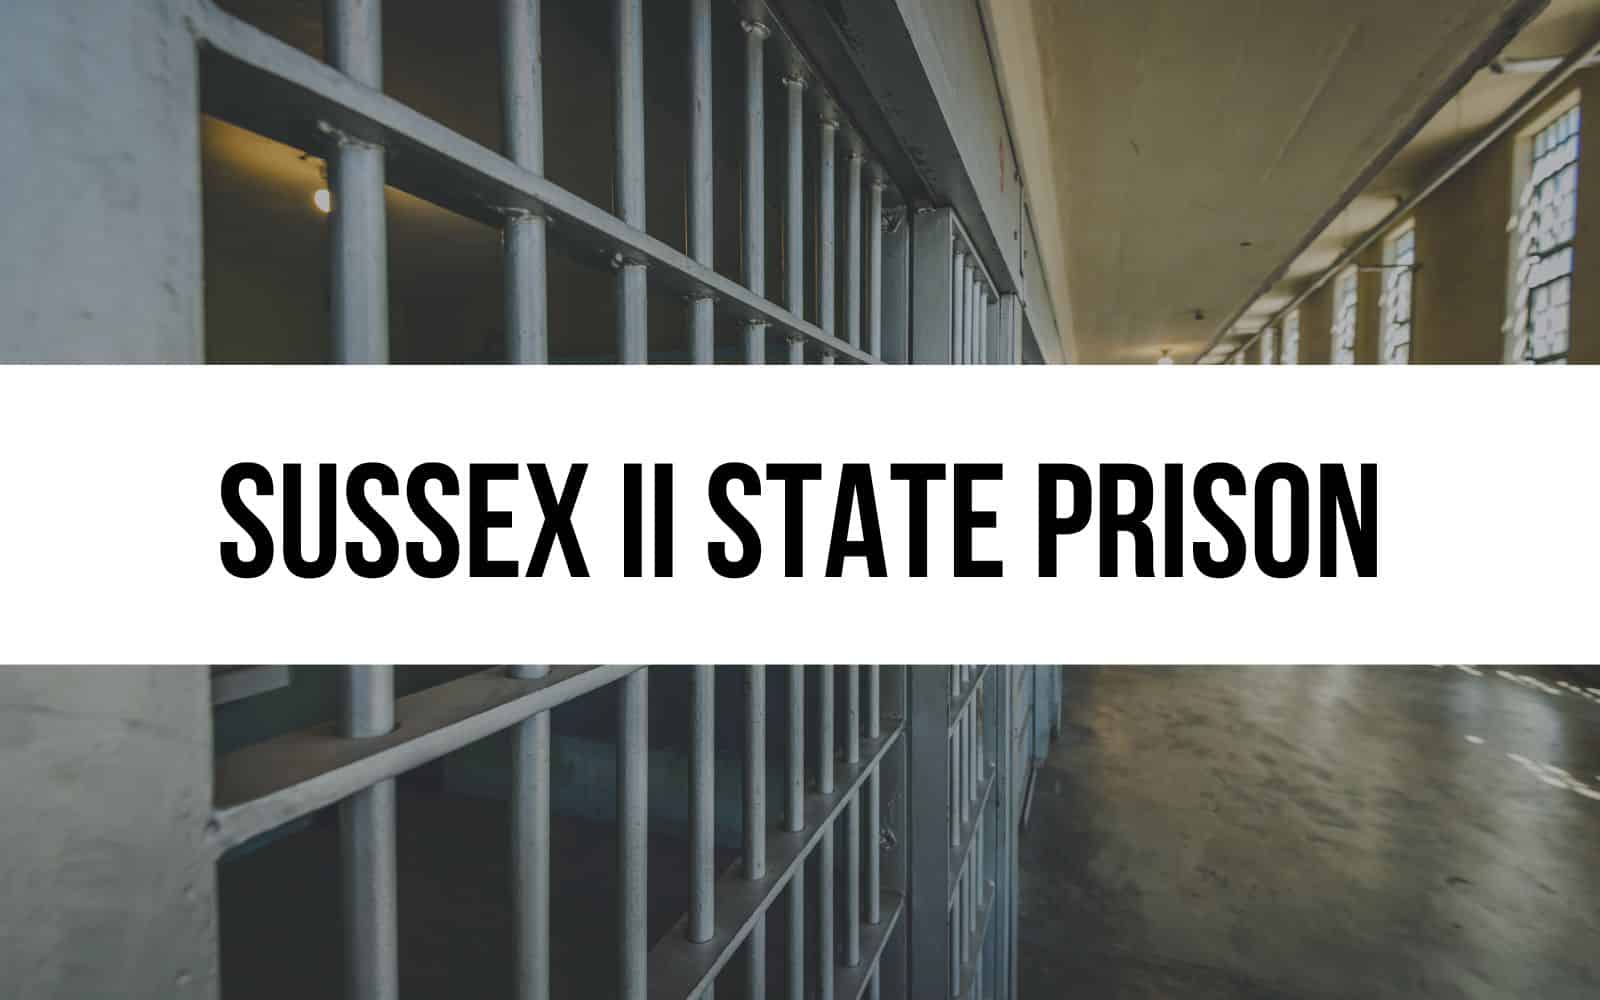 Sussex II State Prison